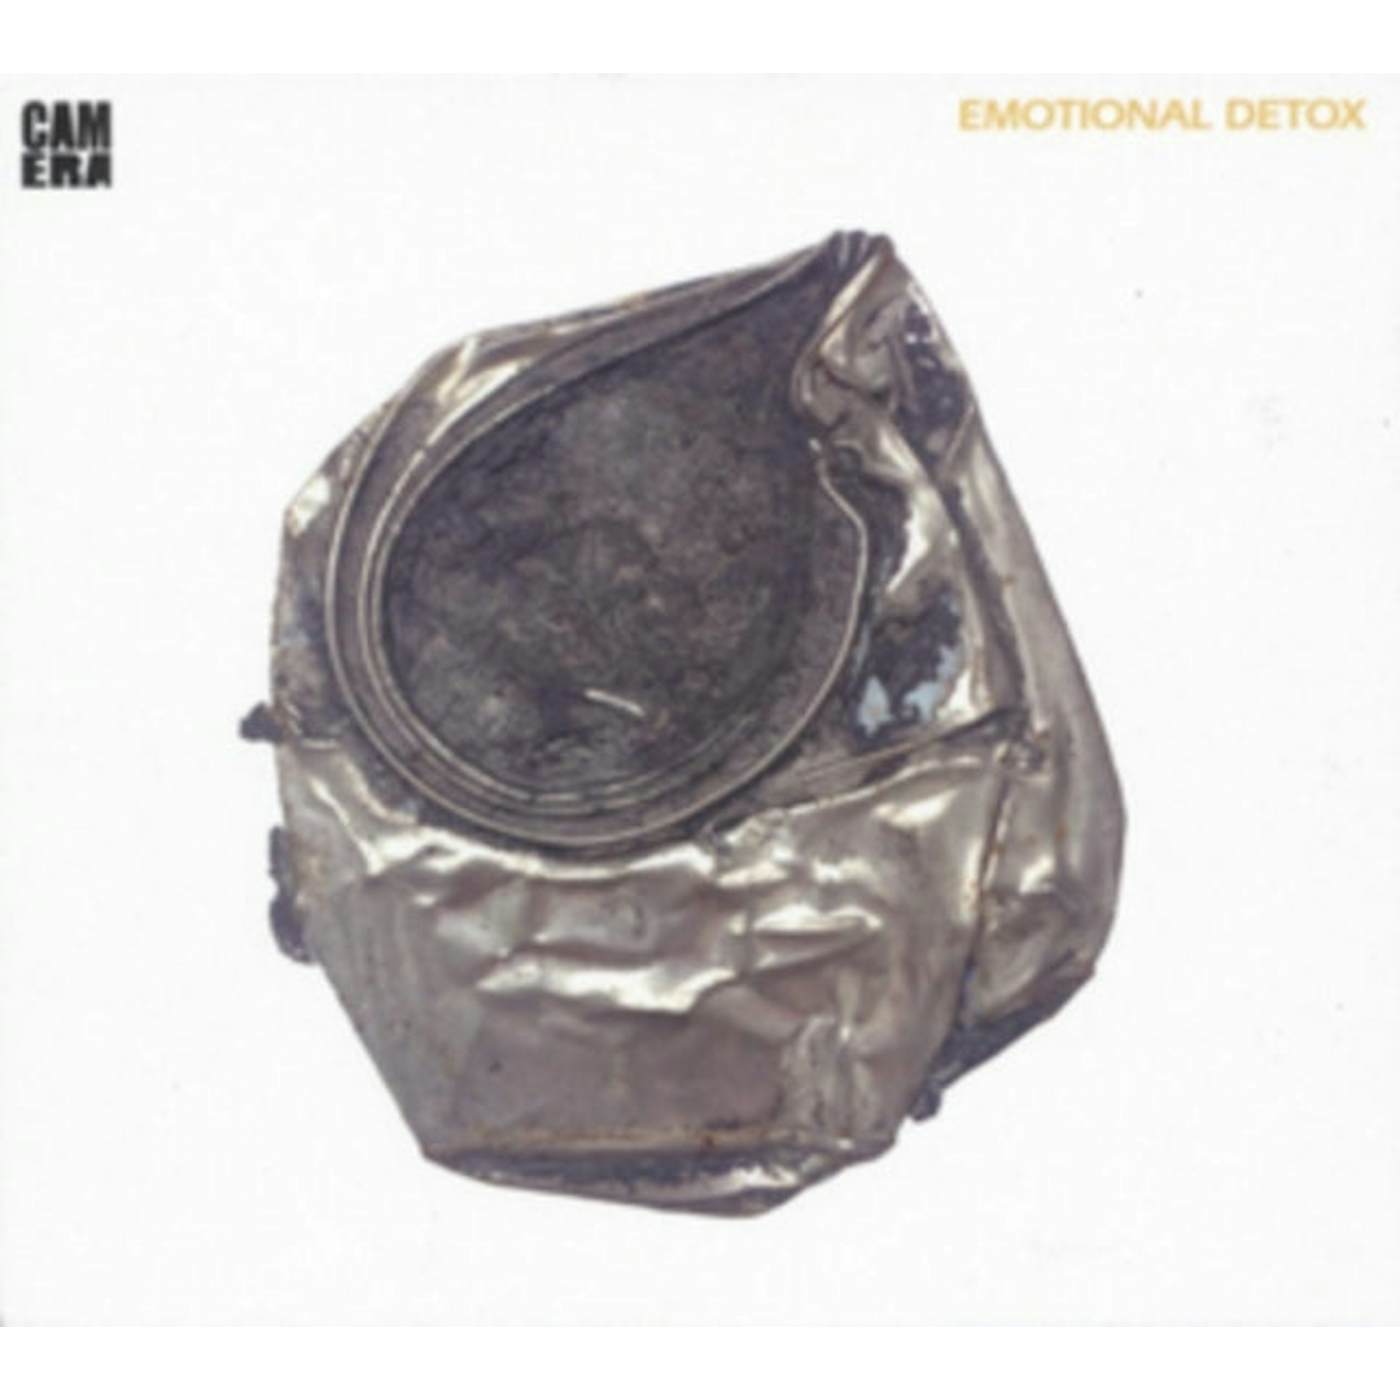 Camera LP - Emotional Detox (Vinyl)